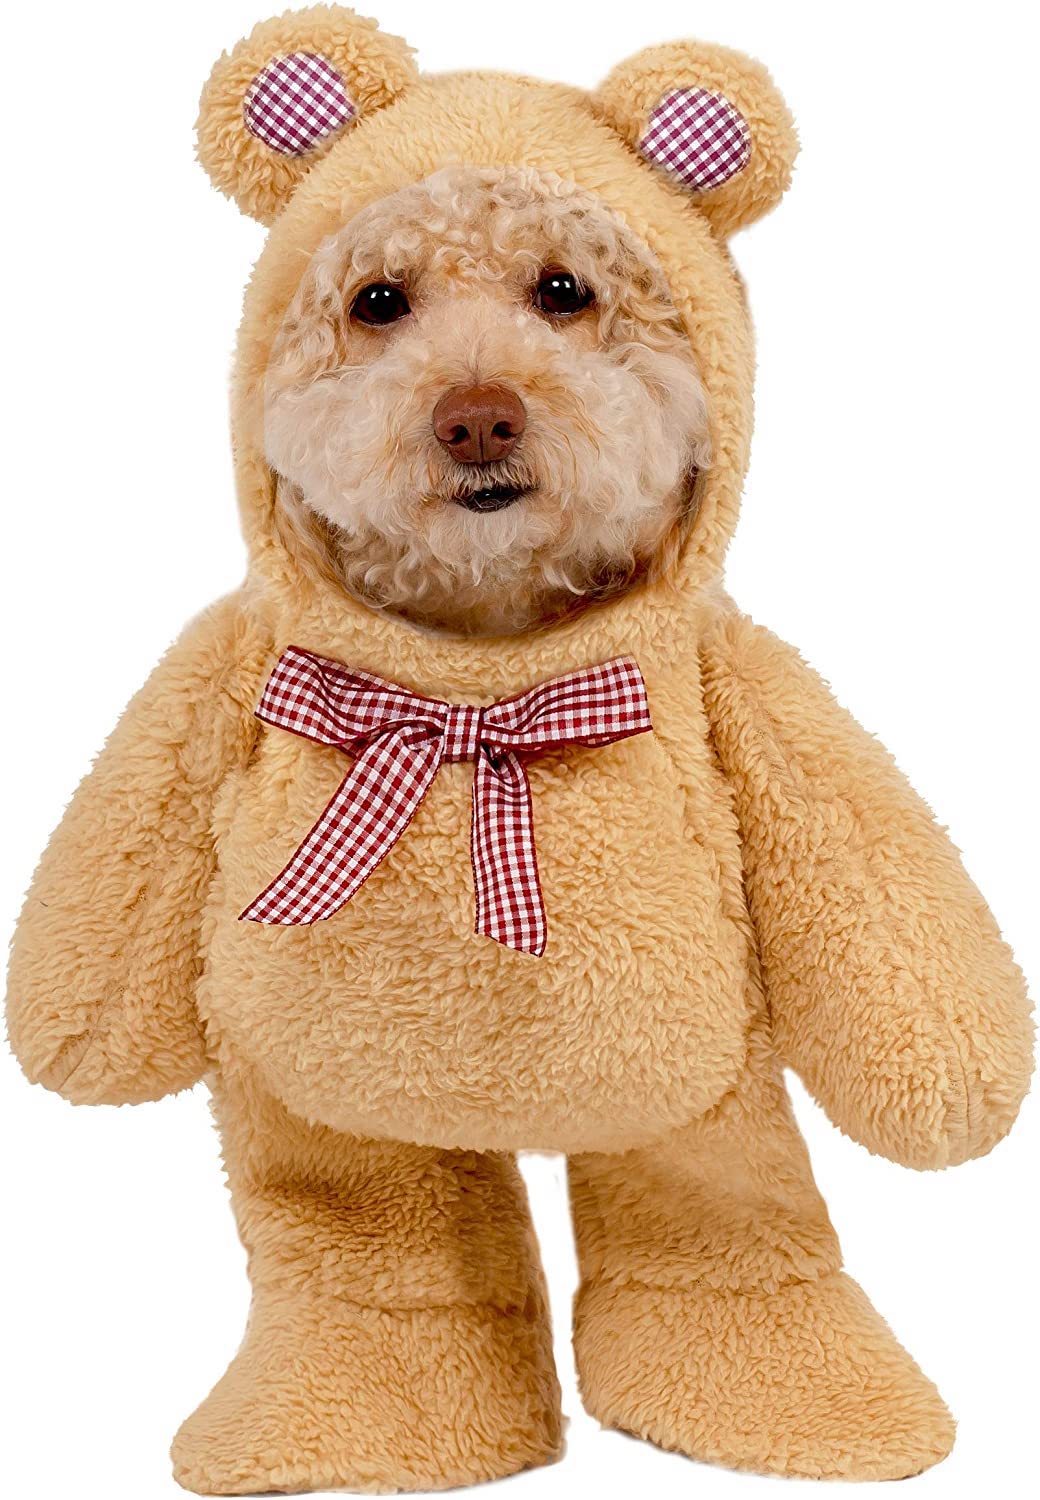 Teddy bear costume